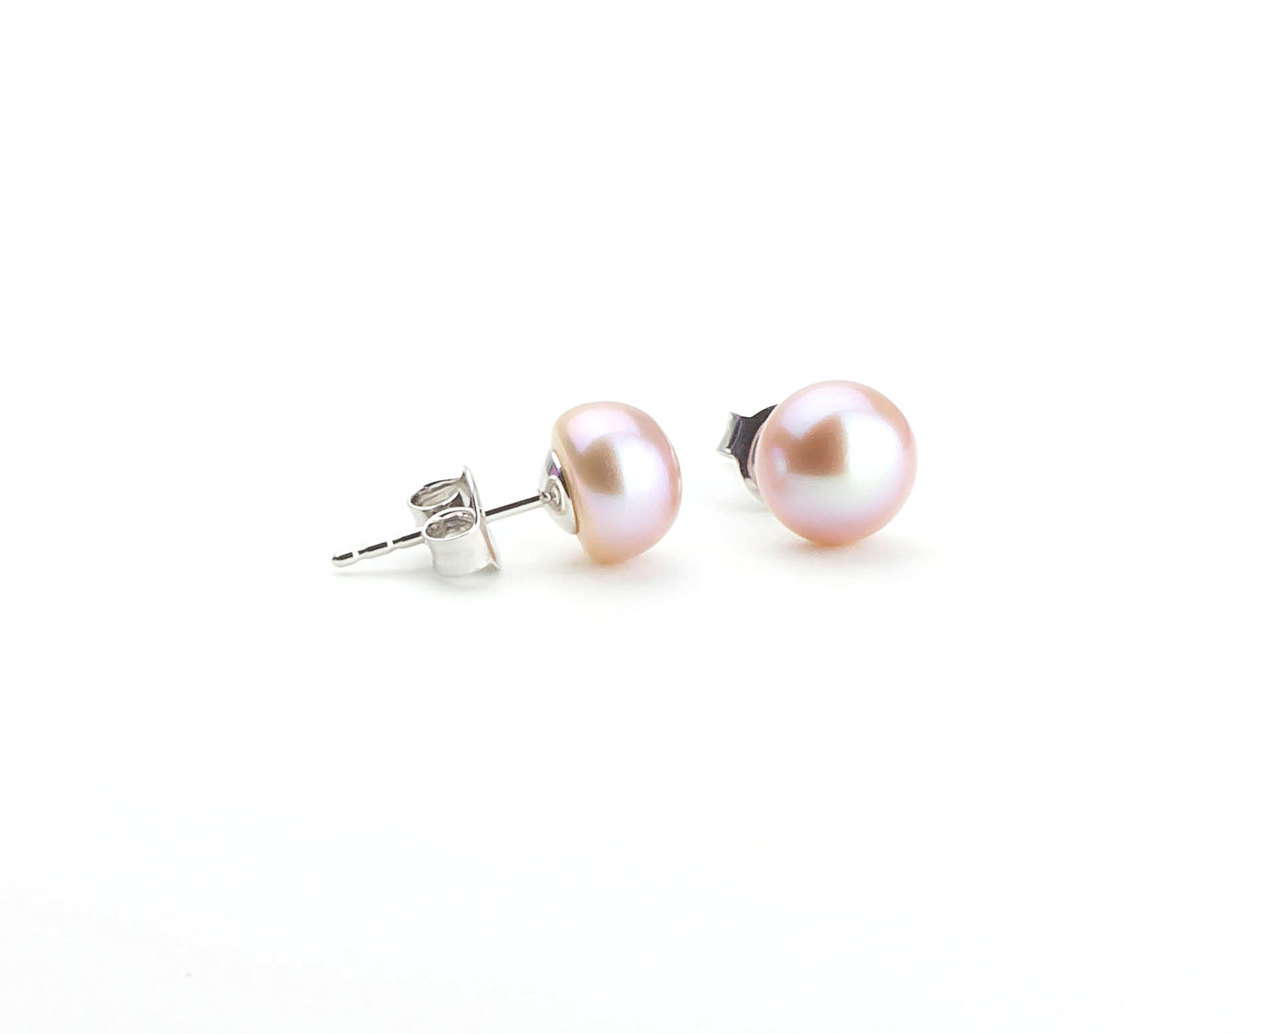 Quality Freshwater Cultured White Pearl Stud Earrings for Women NONNYL 14K Gold Handpicked AAA 